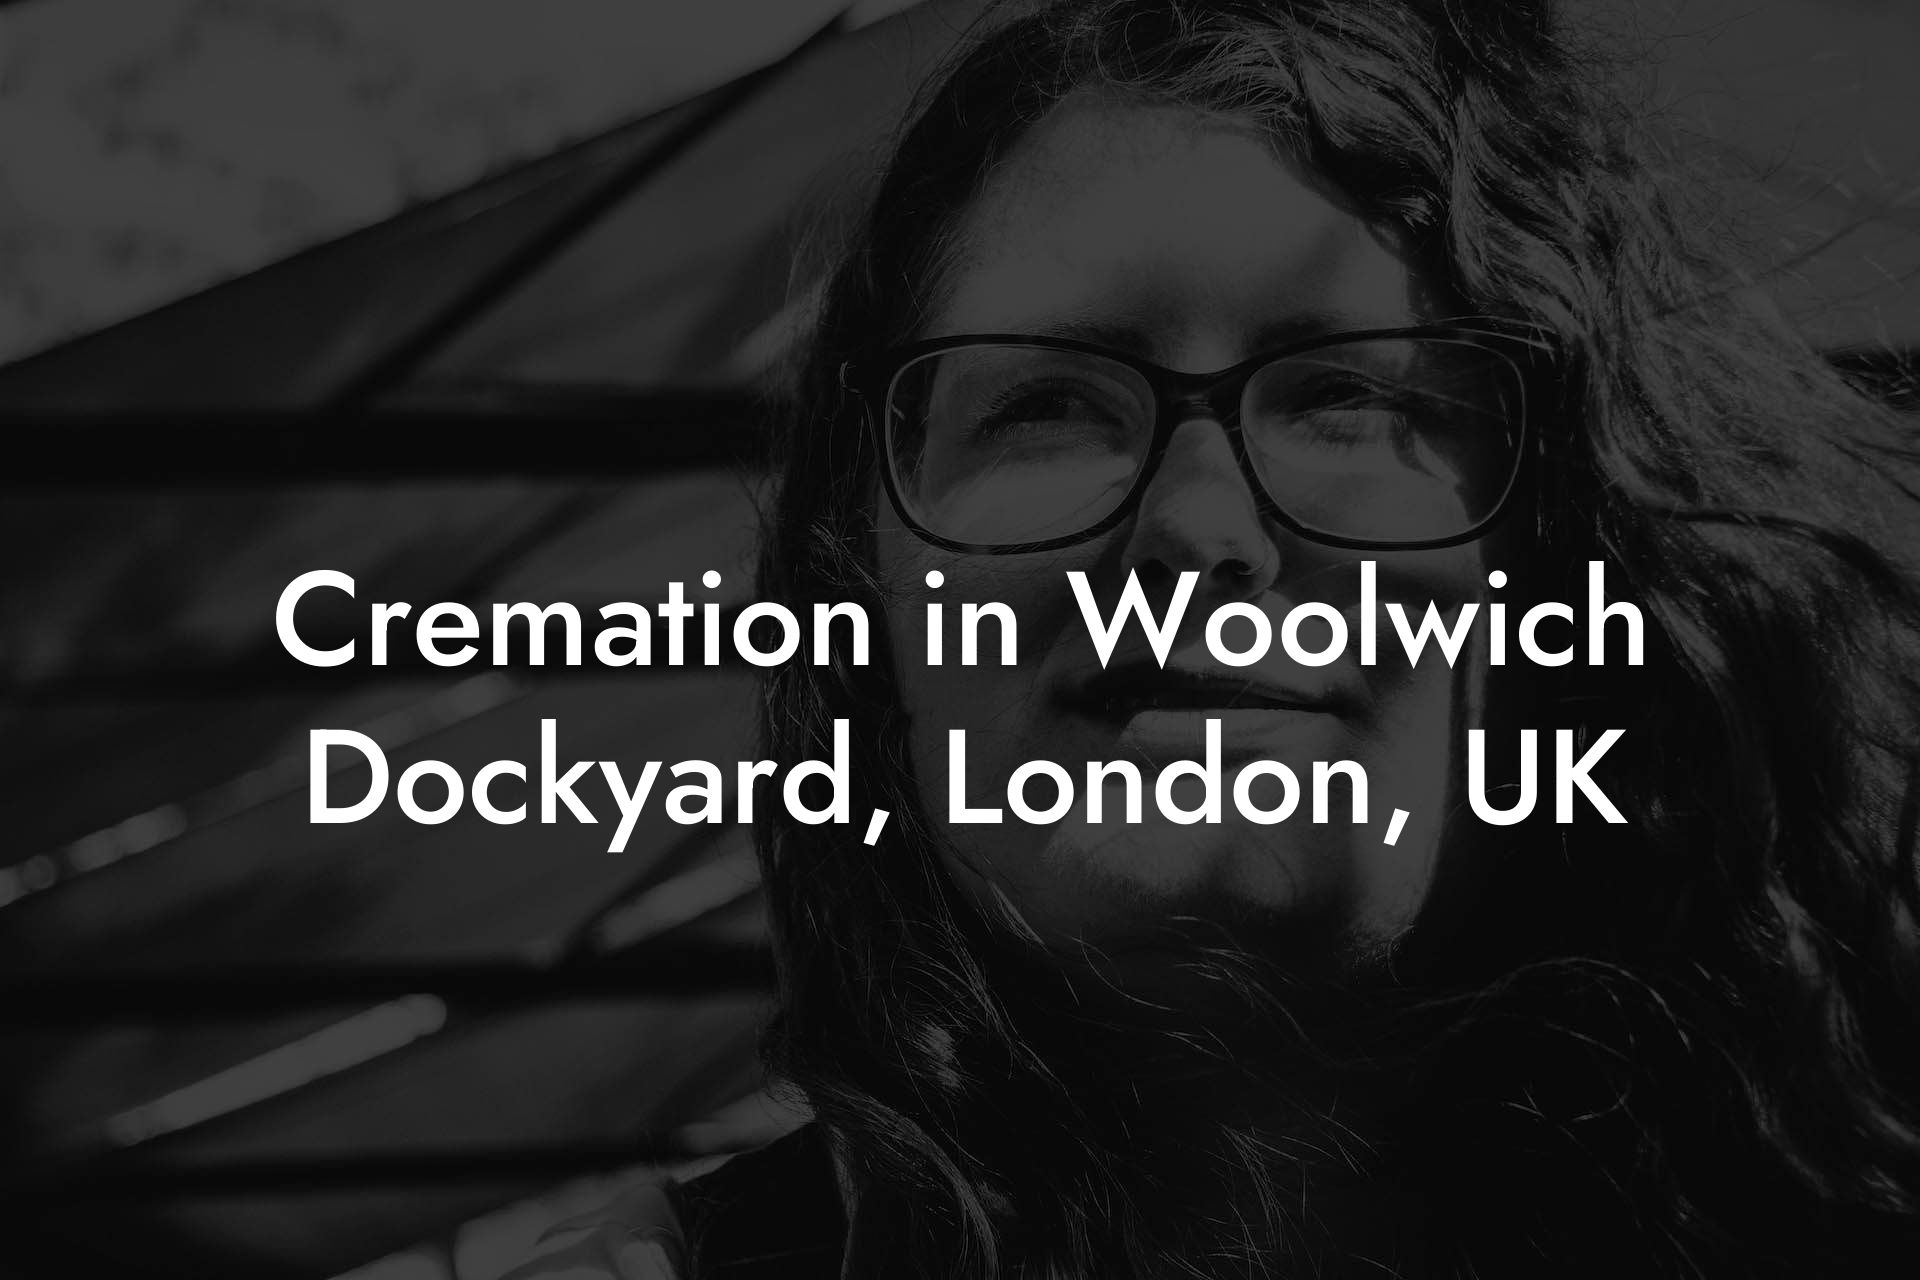 Cremation in Woolwich Dockyard, London, UK